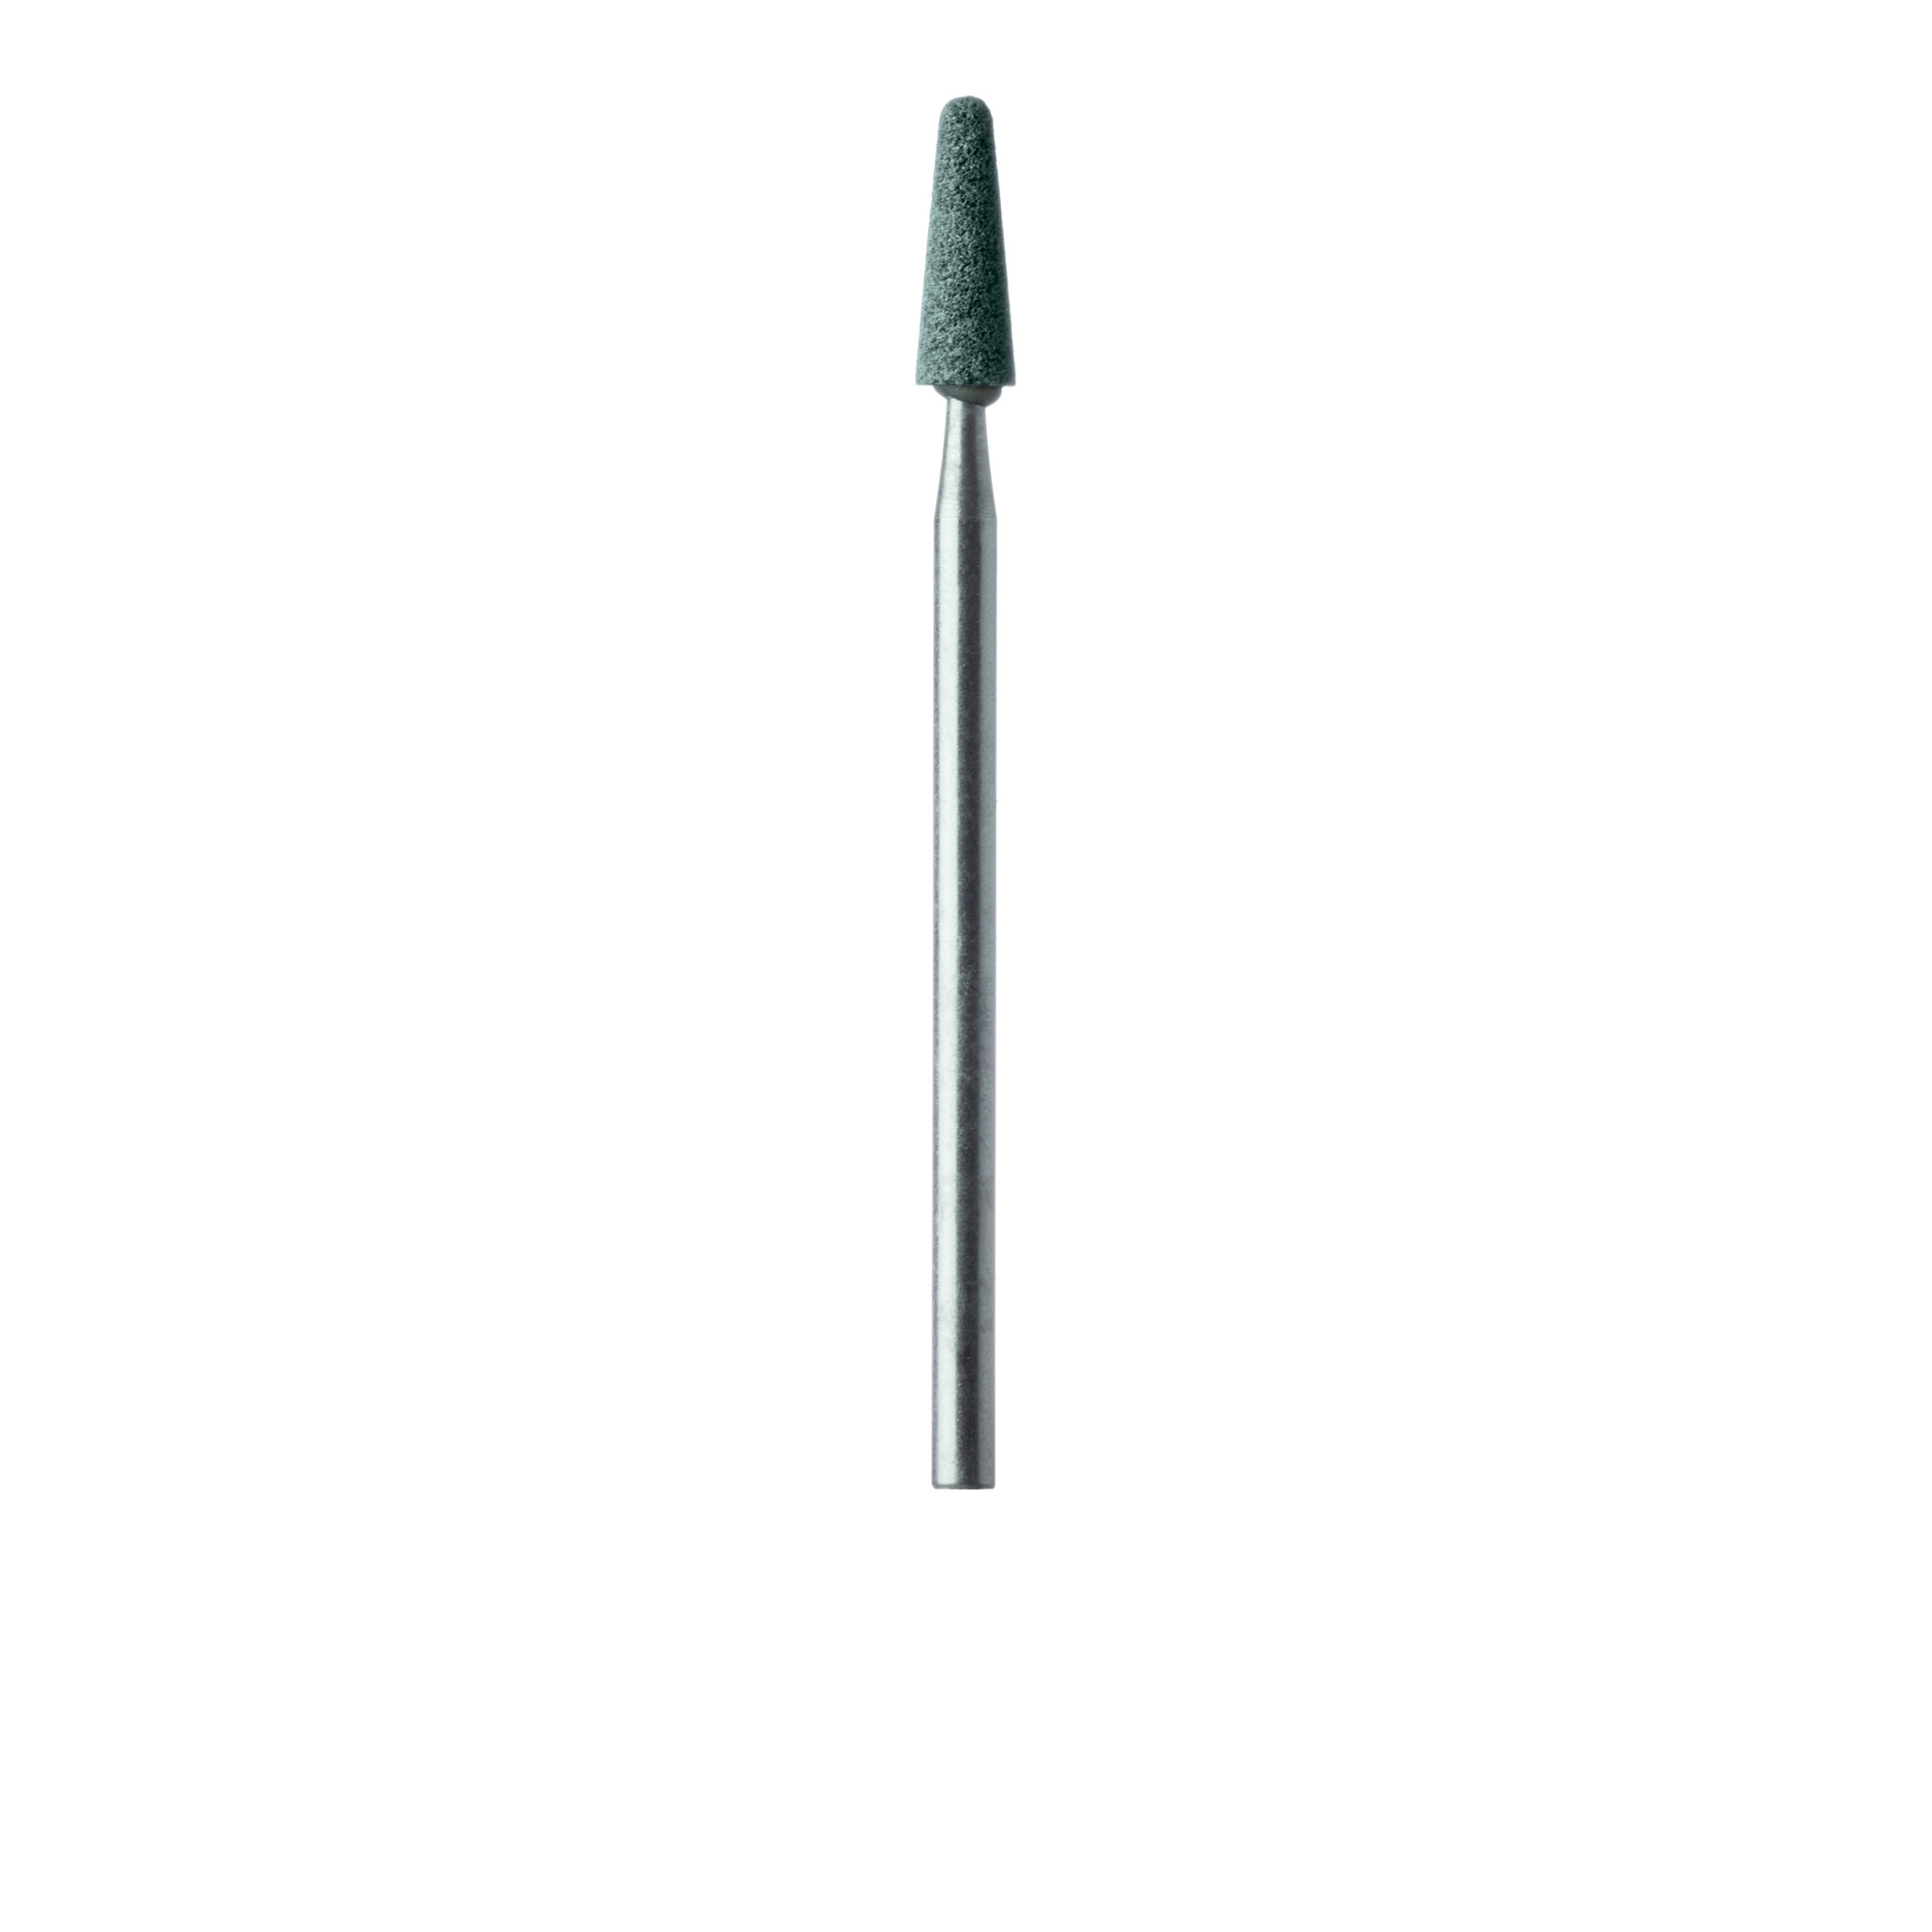 652R-035-HP-GRN Abrasive, Green, Tapered Round End, 3.5mm Ø, Medium, HP